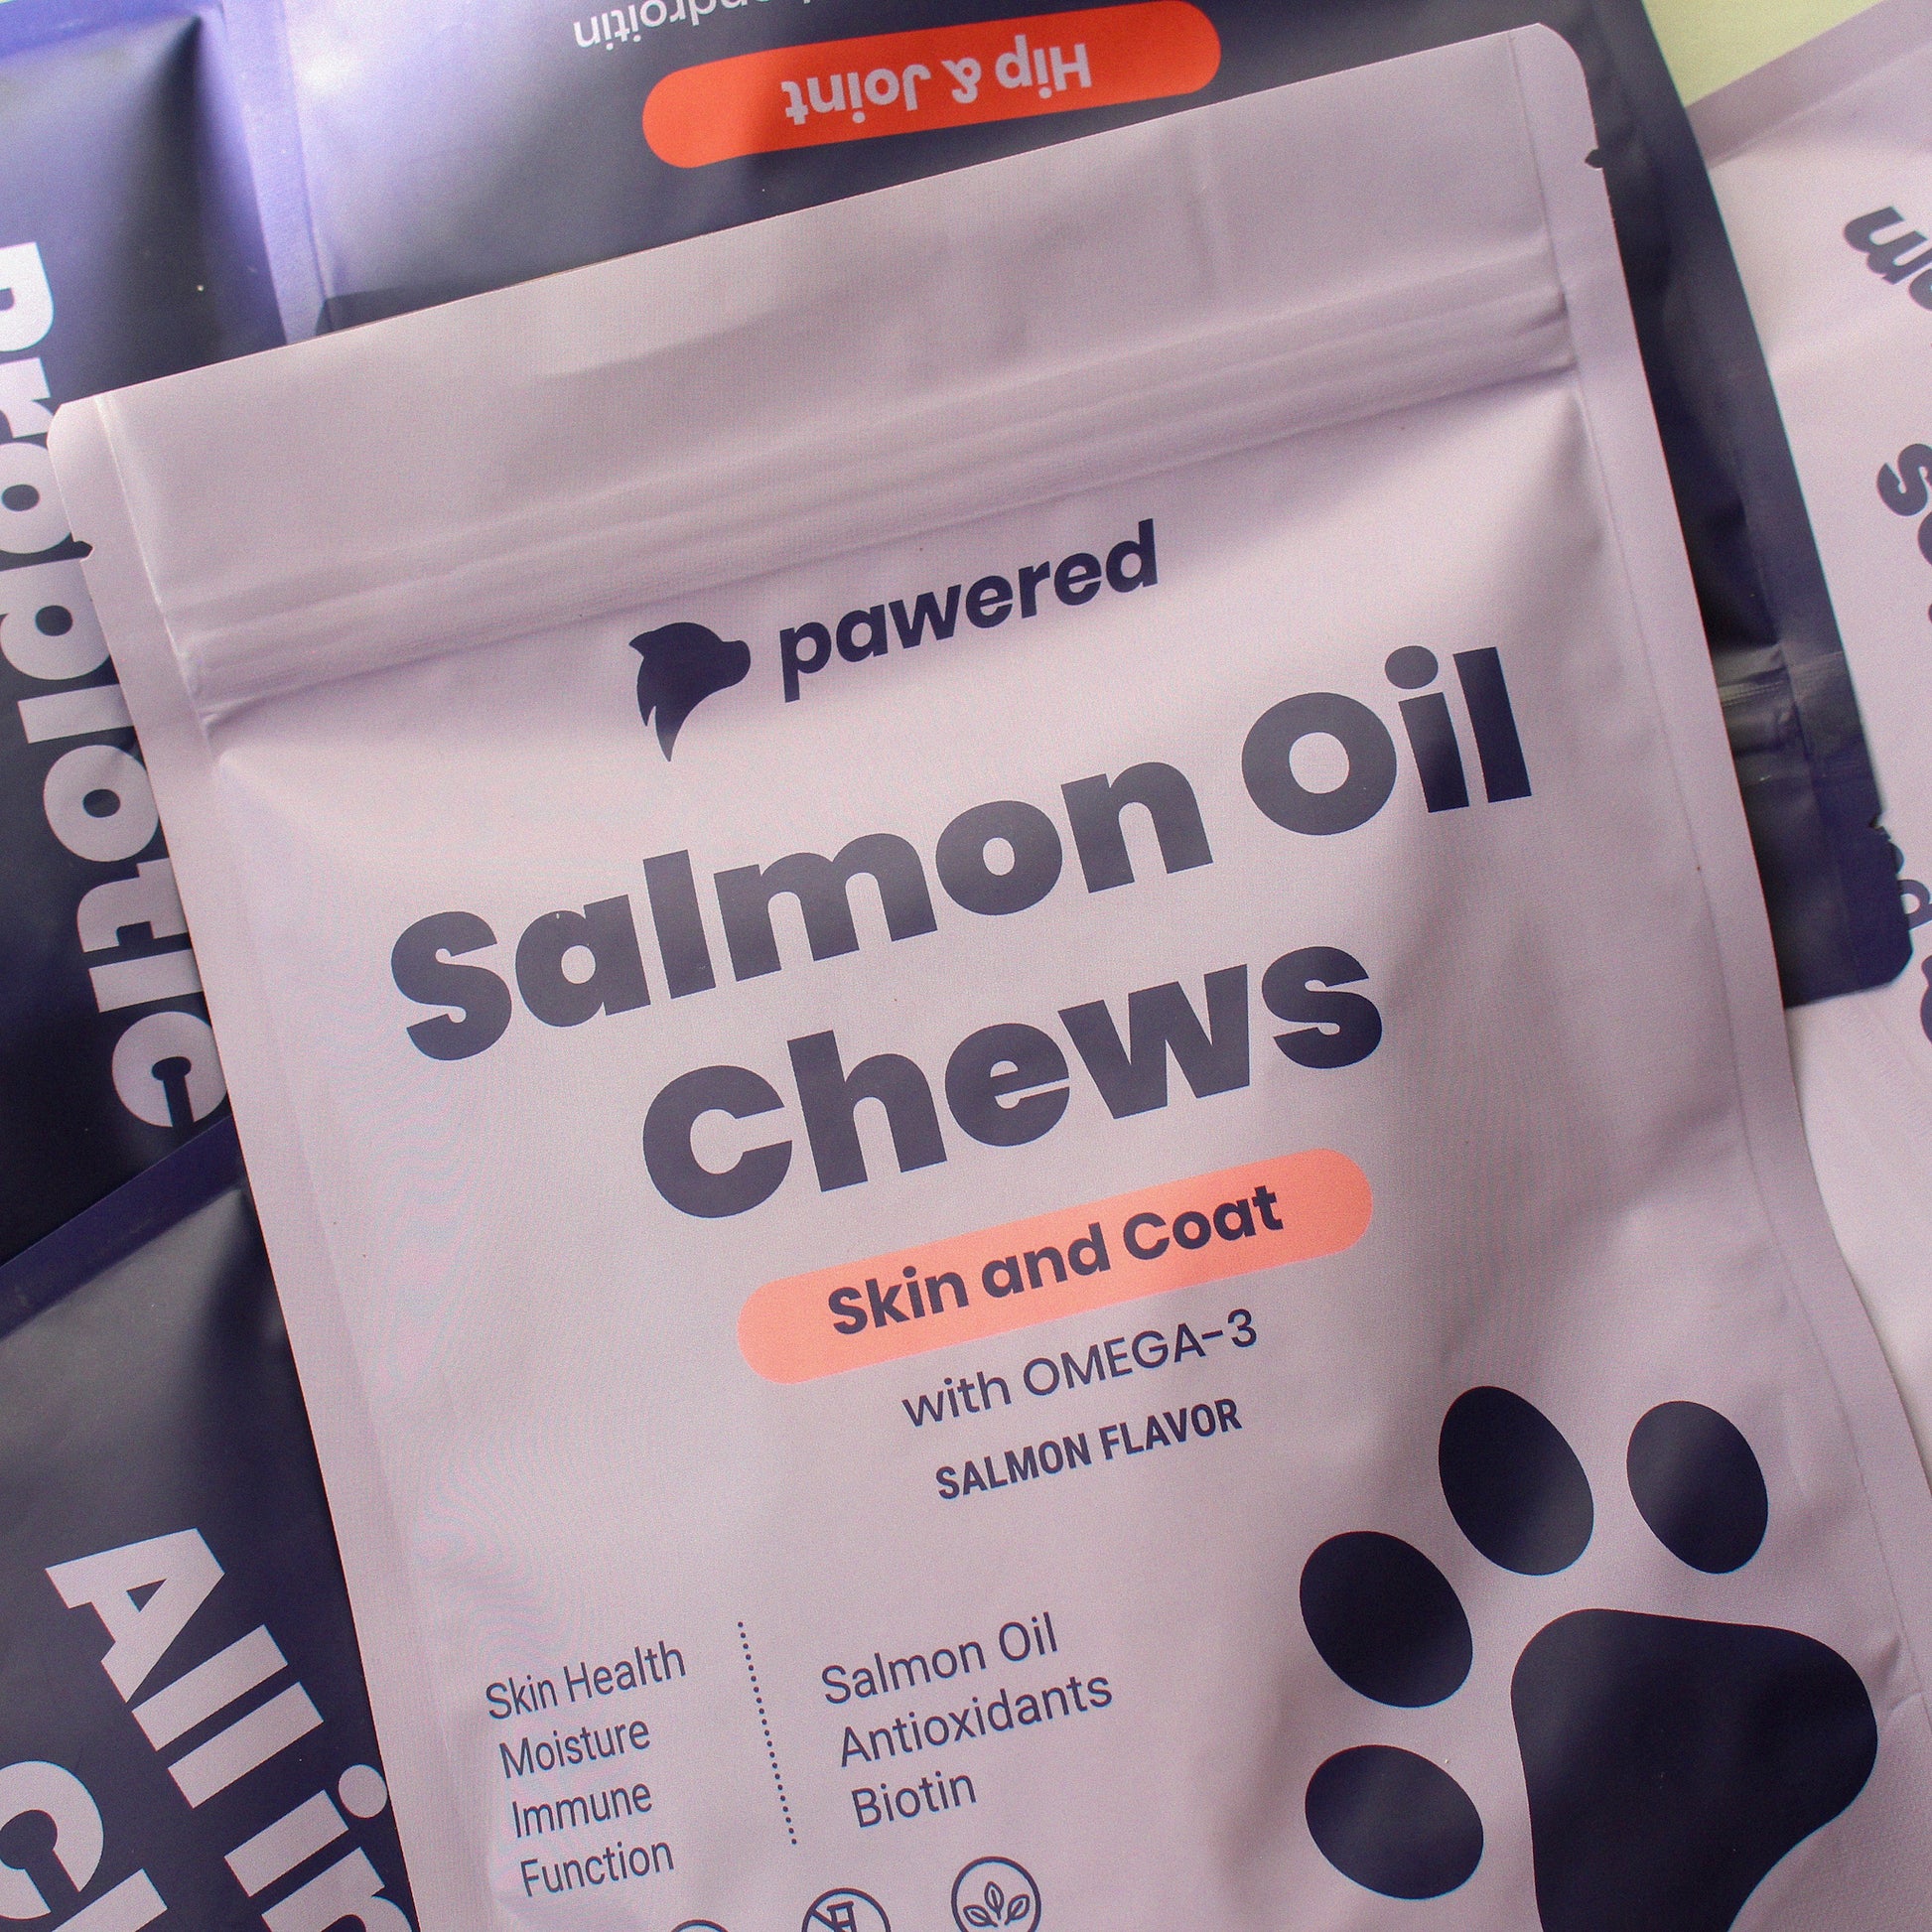 skin and coat dog supplements, folic acid, salmon oil, omega 3, Biotin, kelp, fur